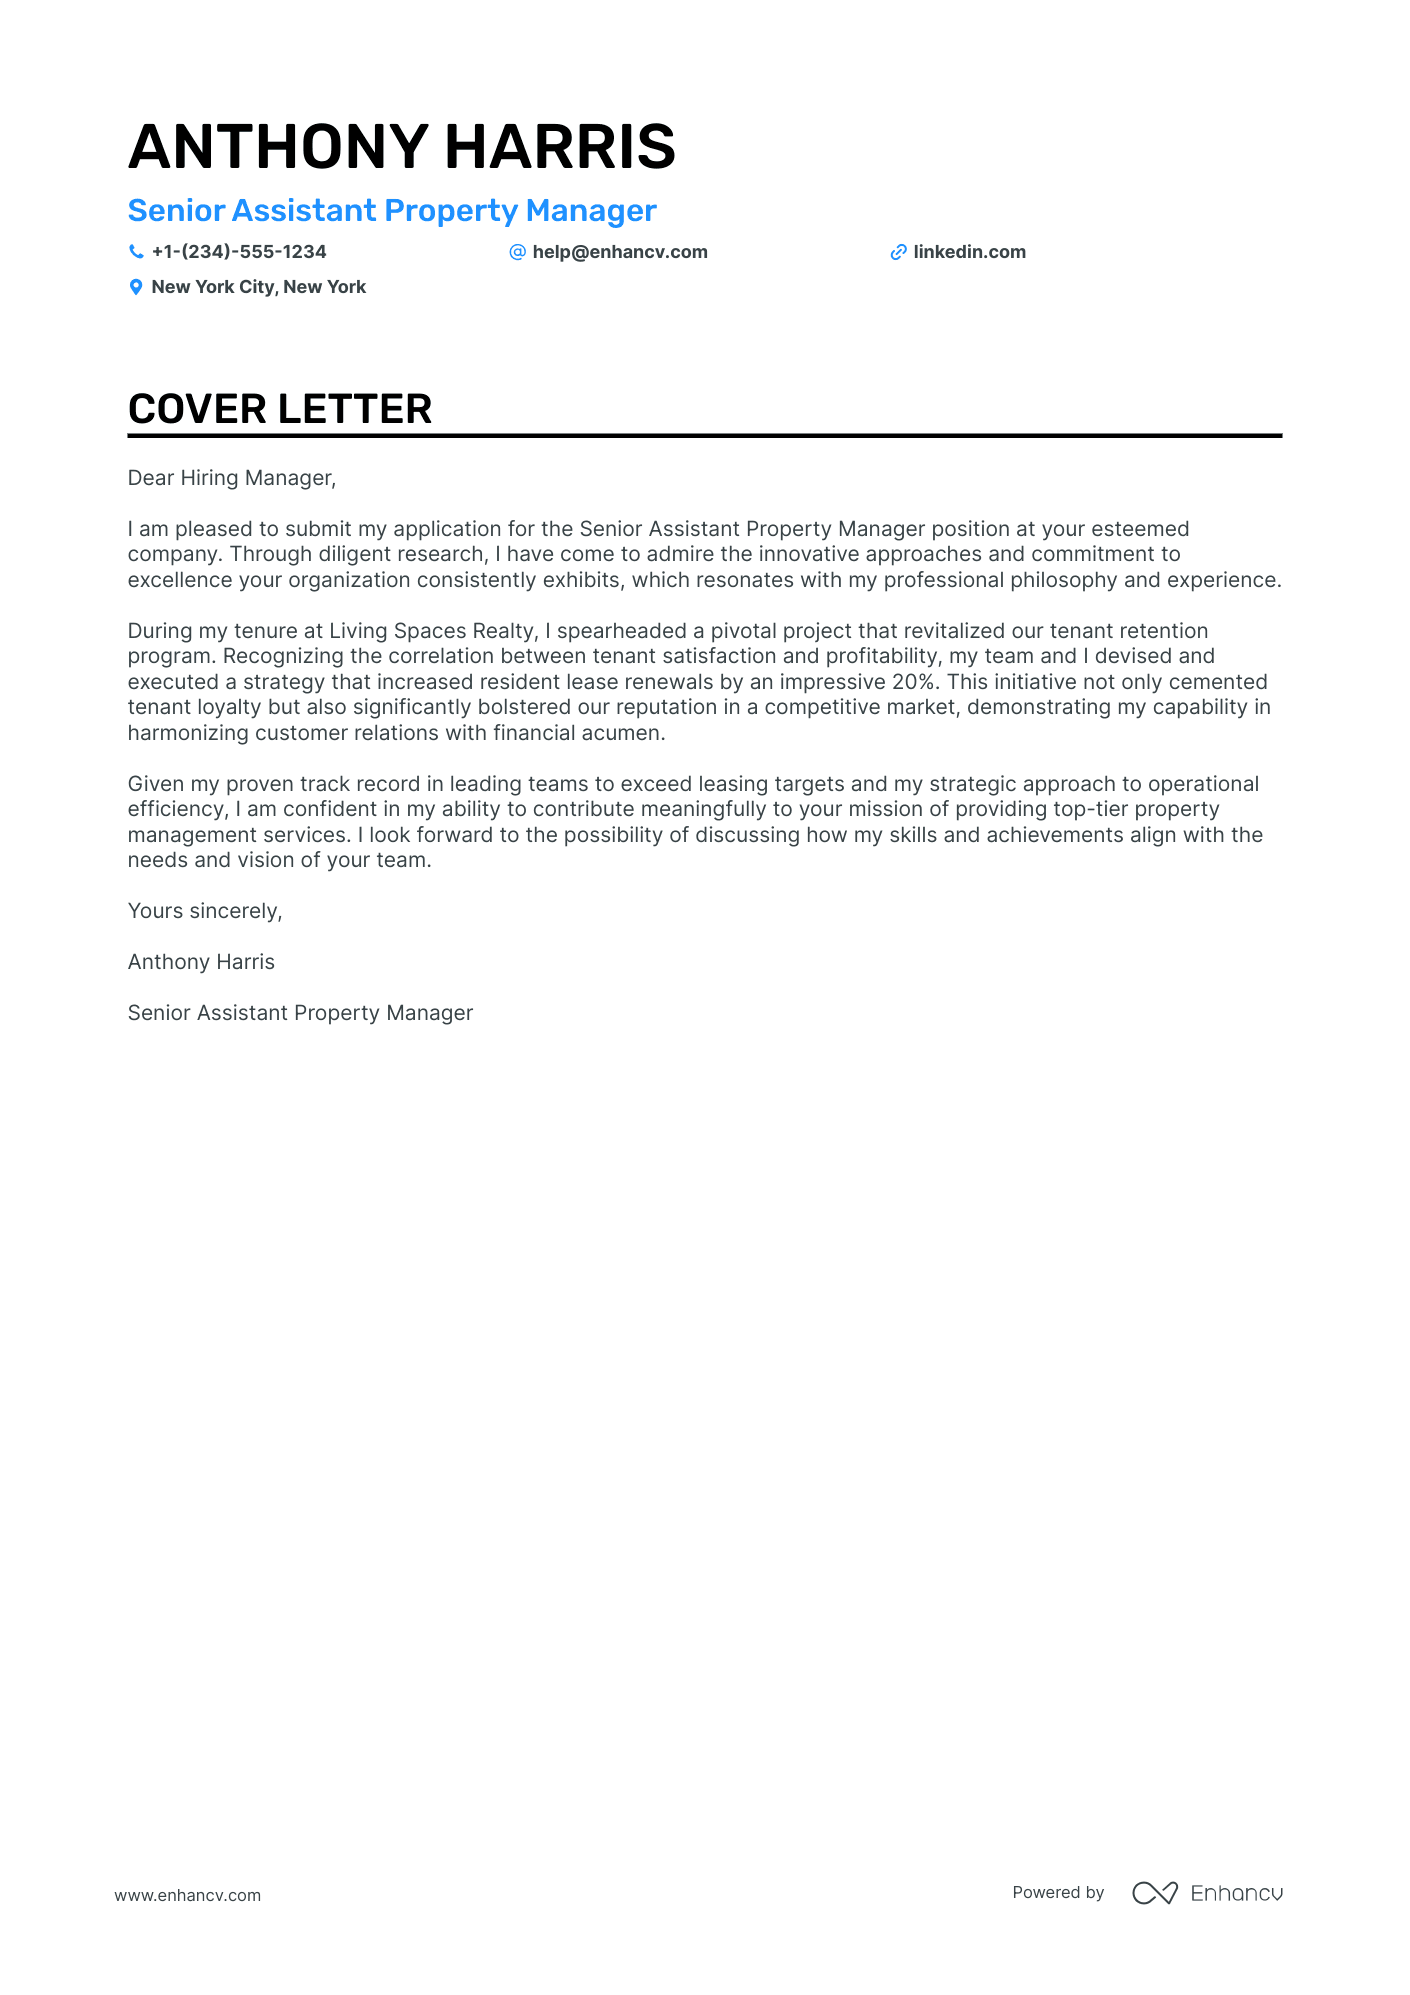 cover letter commercial real estate